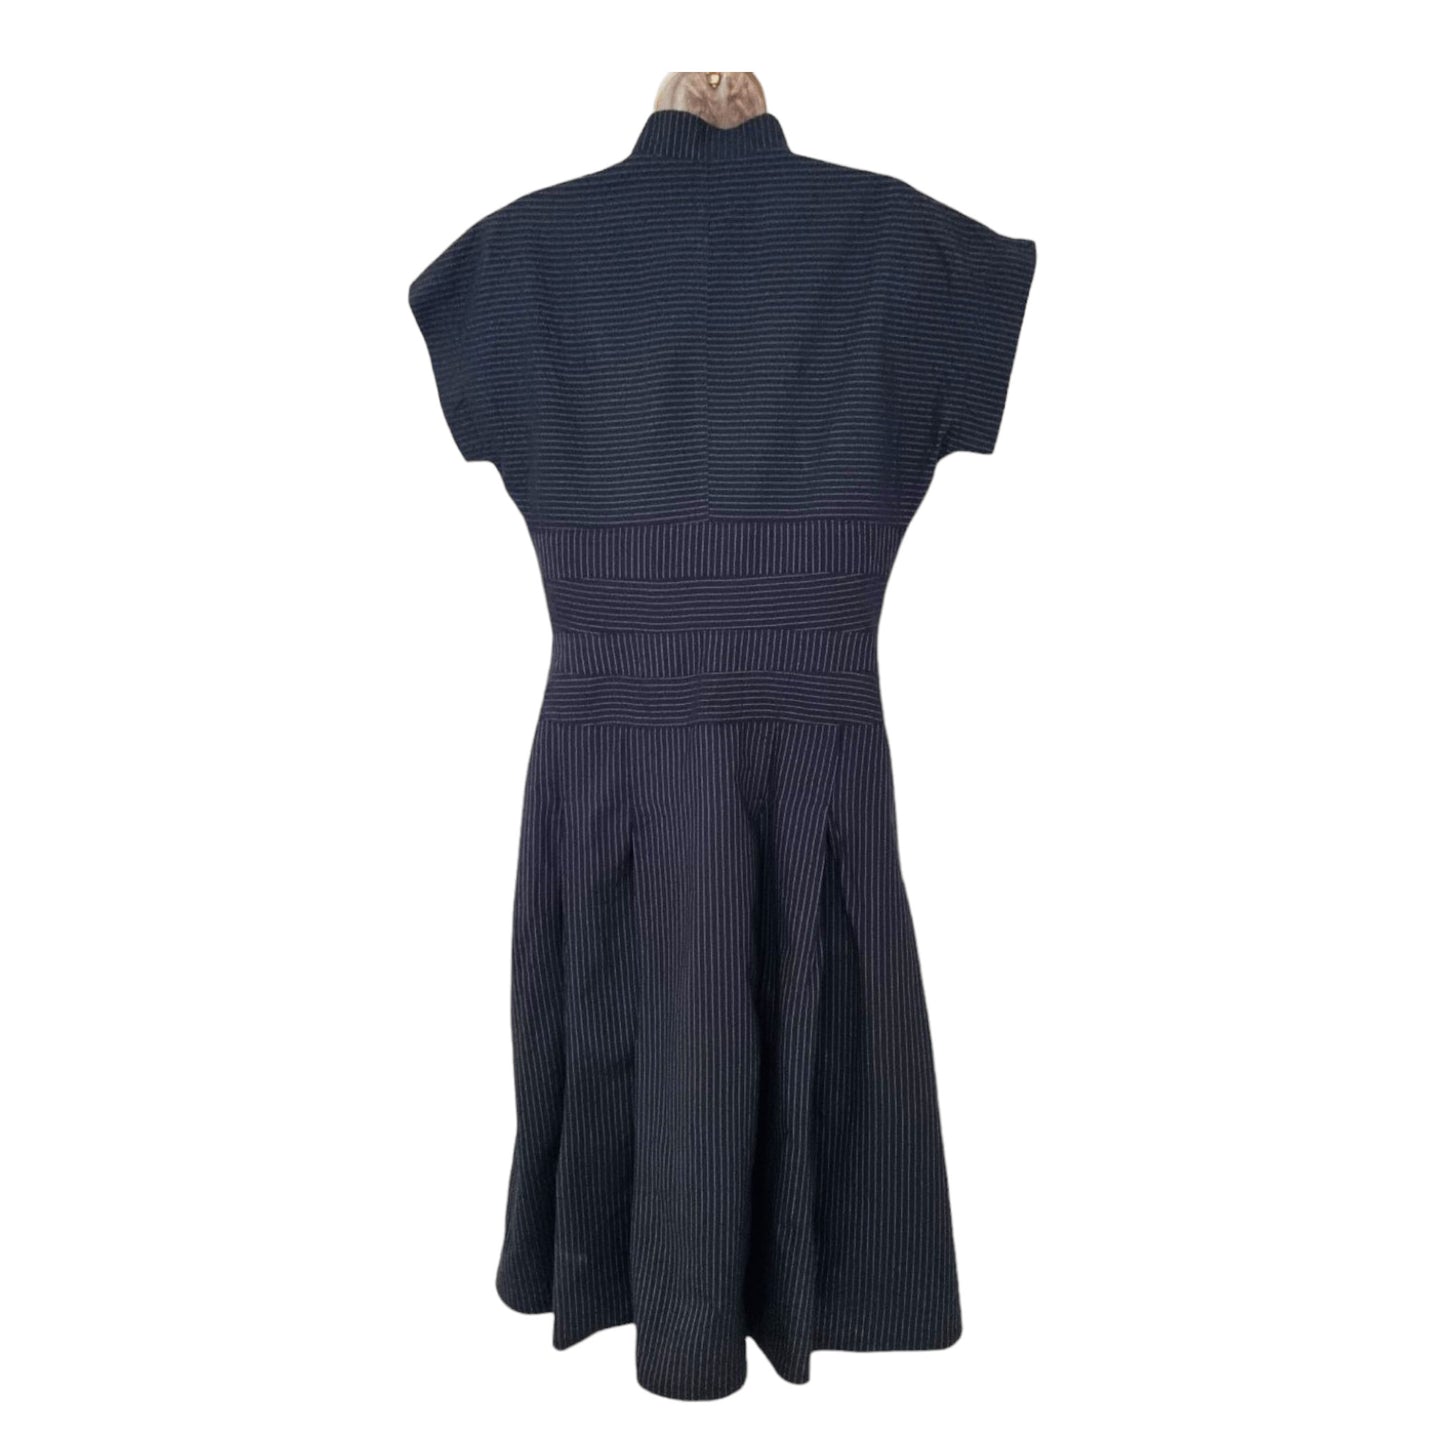 Sylvia Heise Vintage Black & White Striped Dress UK 12 US 8 EU 40 IT 42 Timeless Fashions